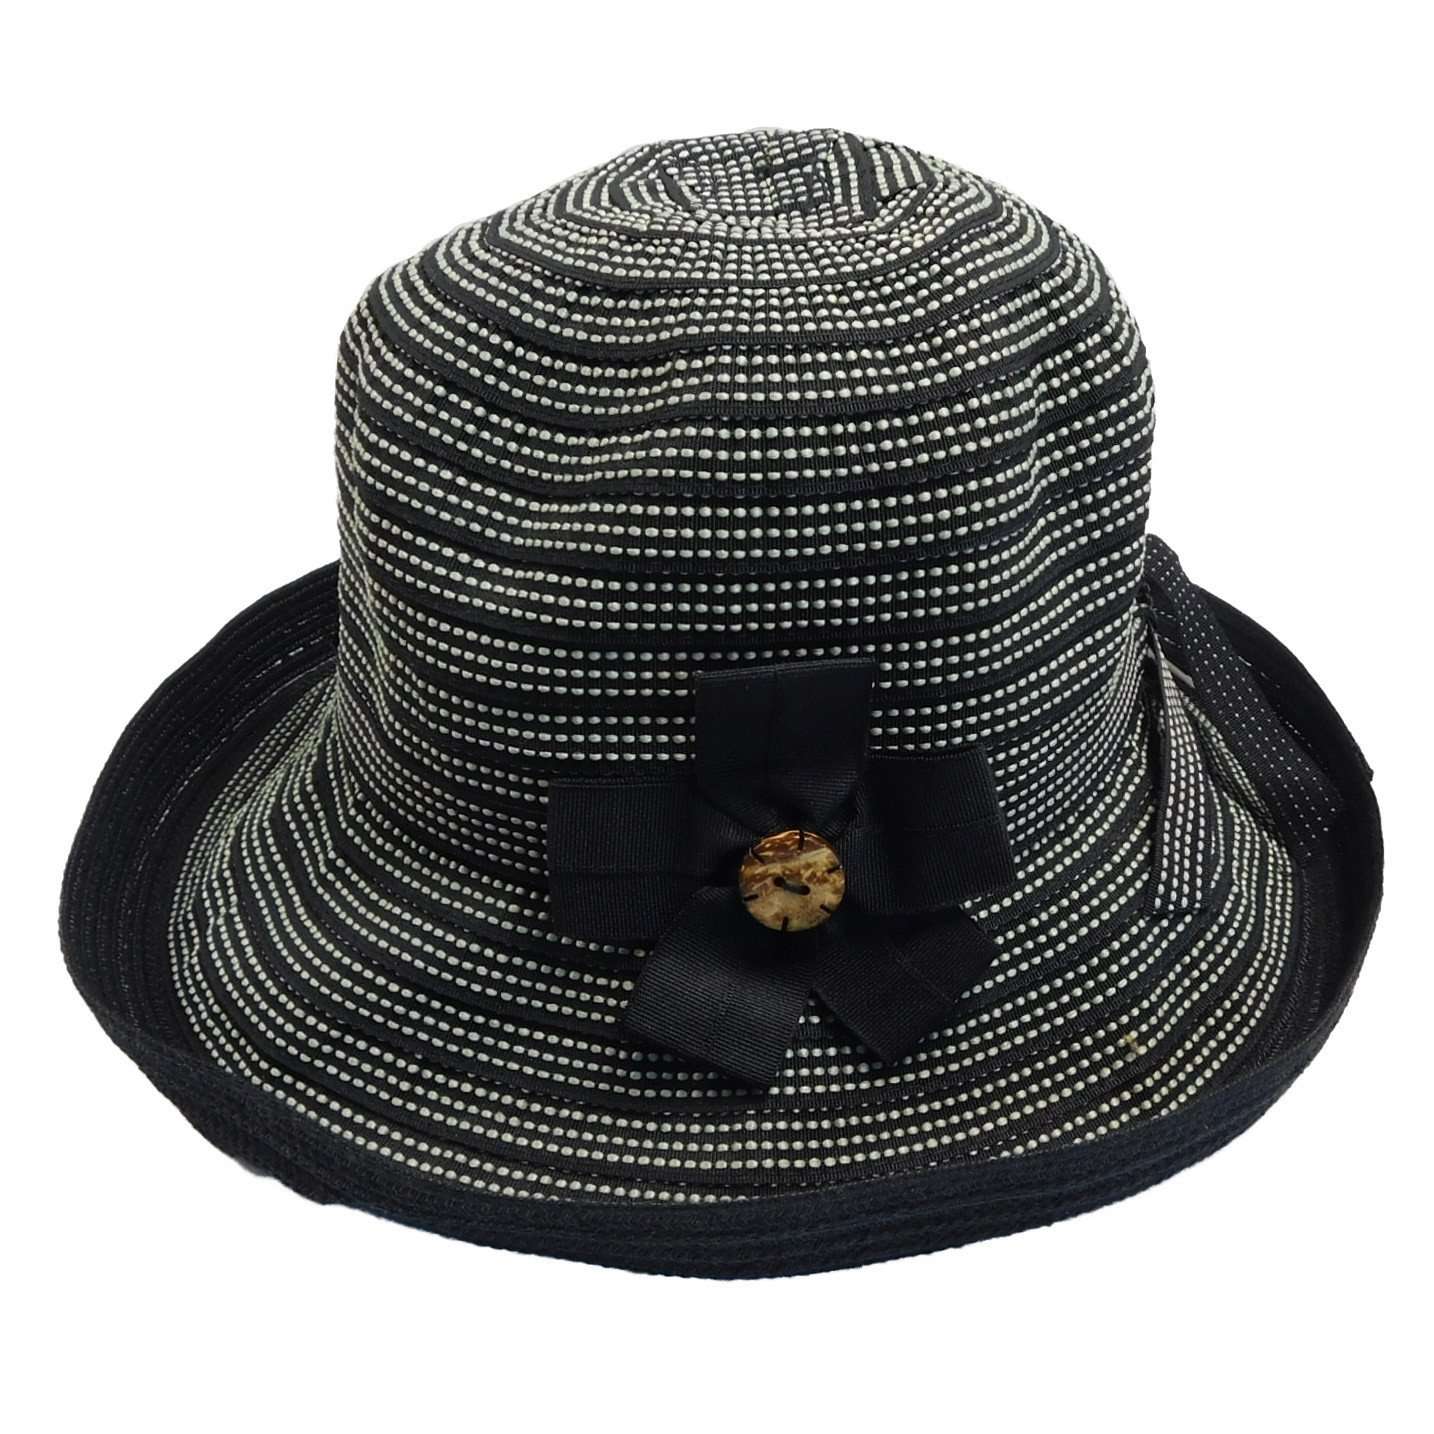 Upturned Brim Hat with Decorative Stitching Kettle Brim Hat Jeanne Simmons WSPO717BK Black  